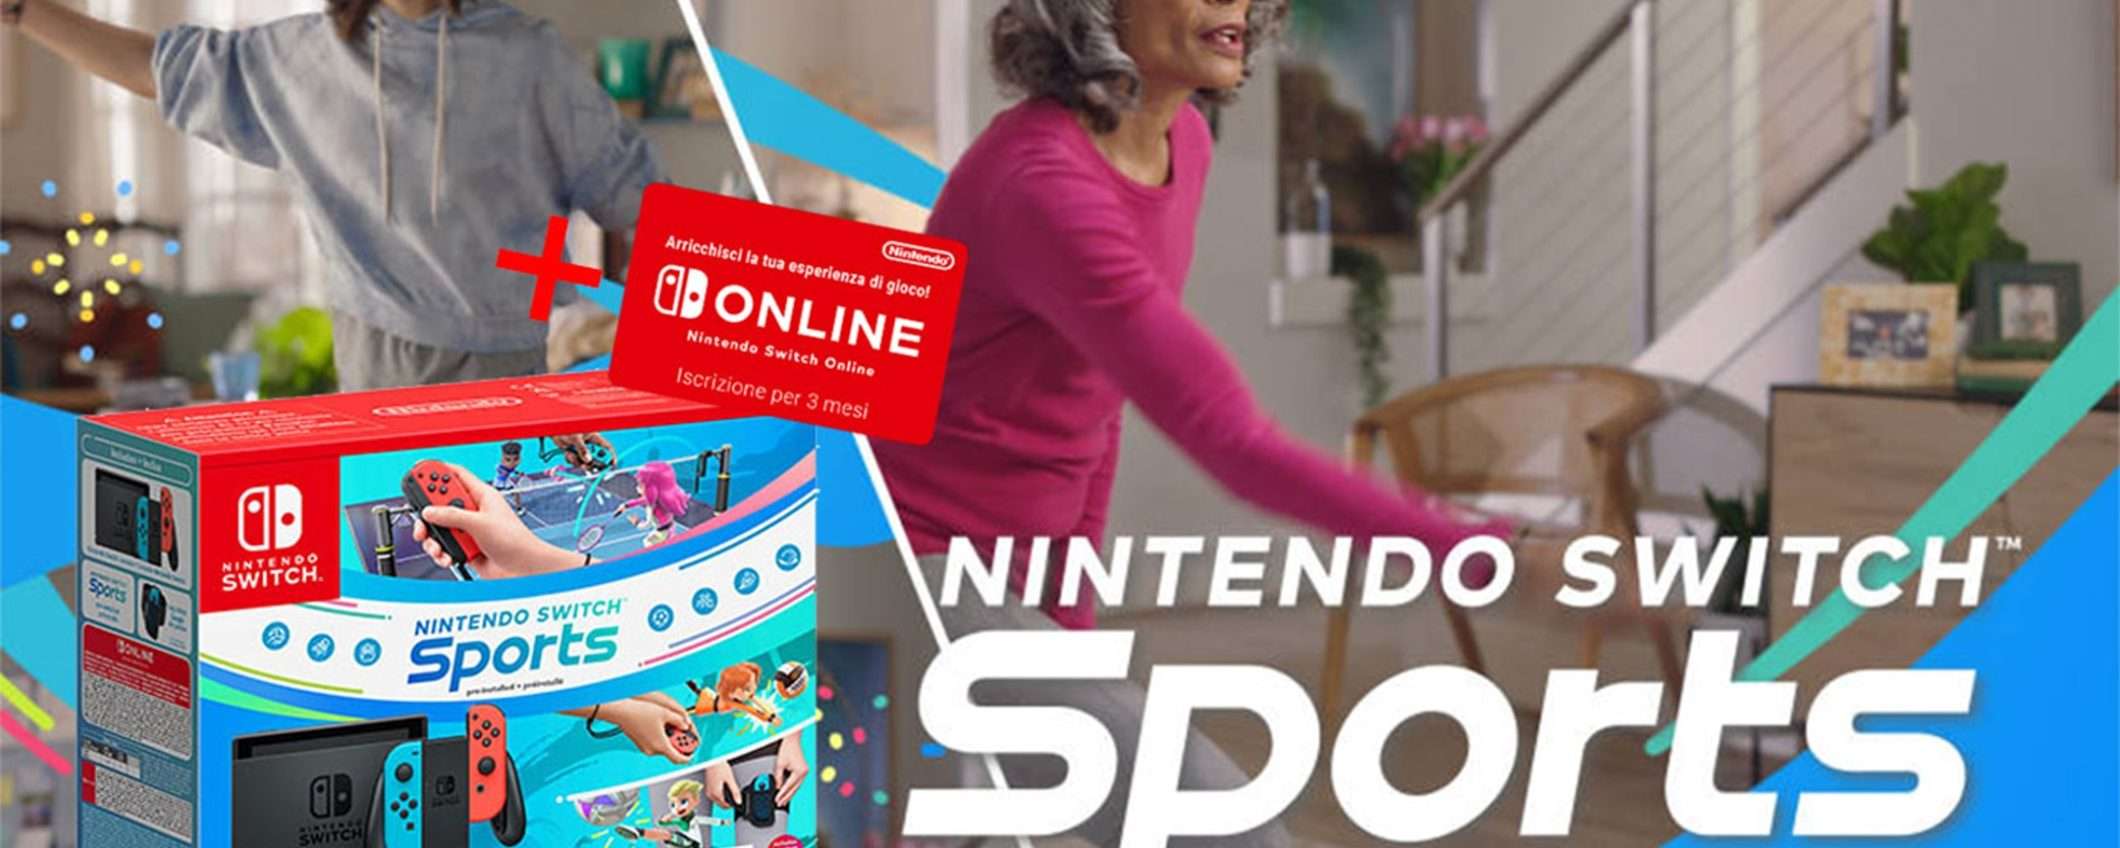 Nintendo Switch + Switch Sports: PREZZONE di eBay, ma AFFRETTATEVI!